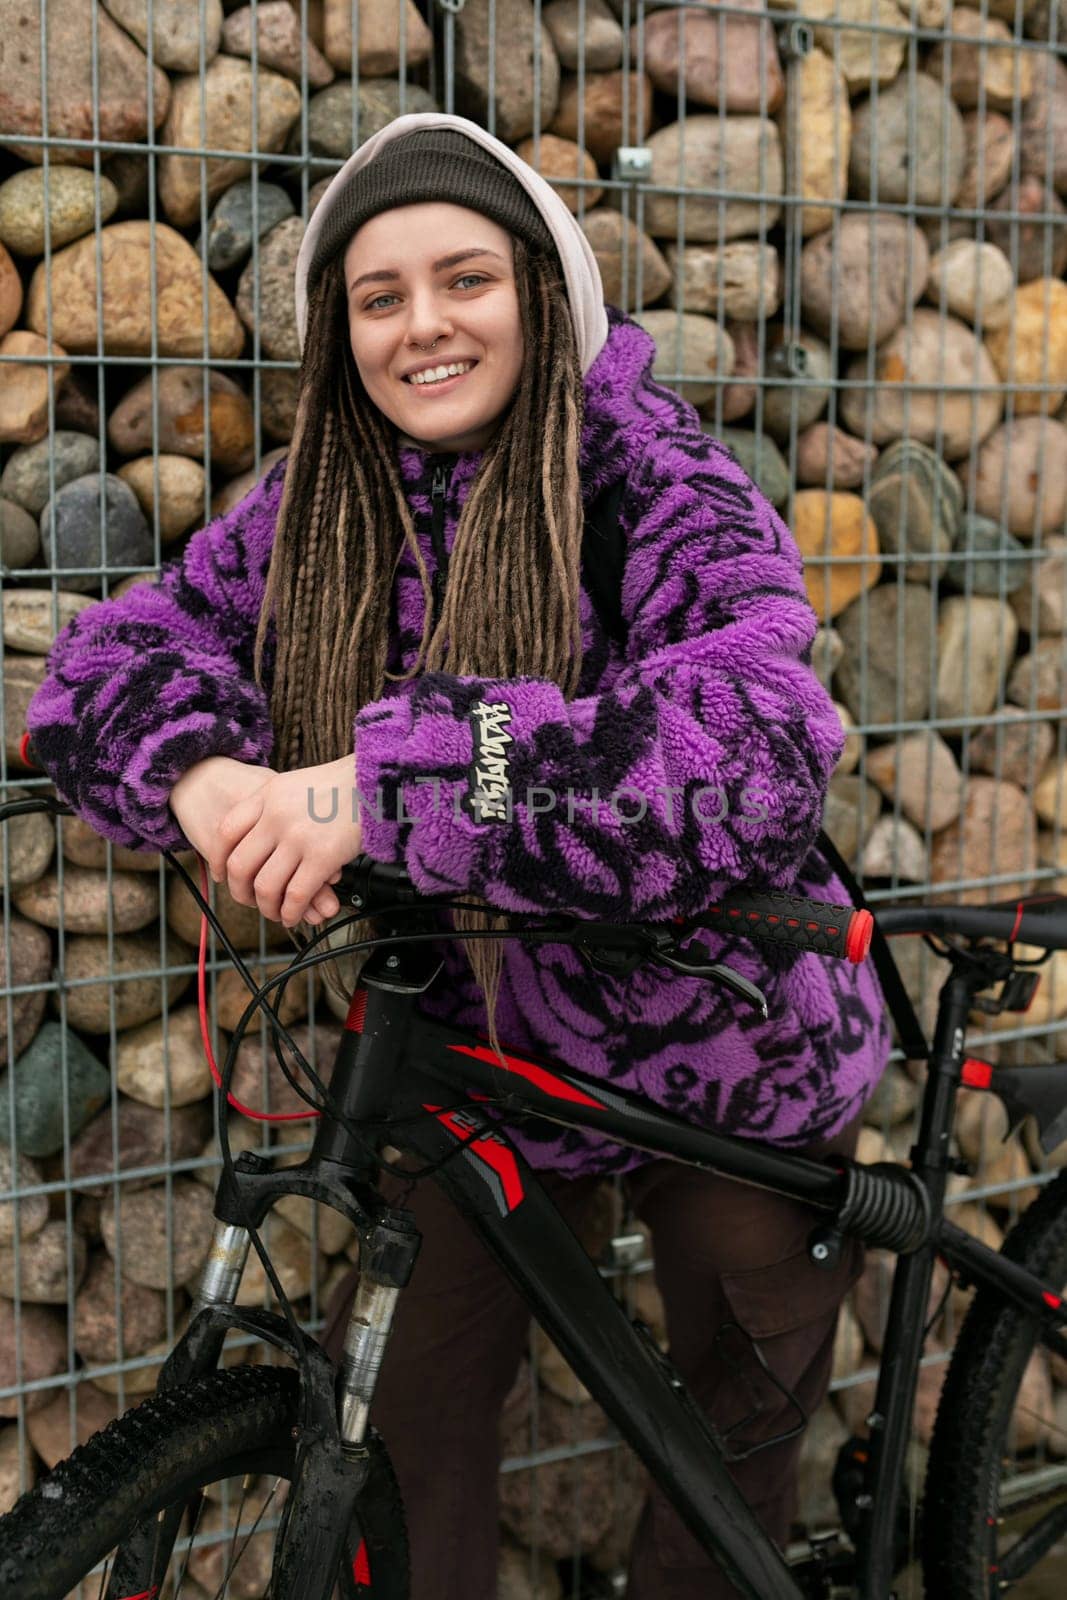 European stylish woman riding a sports bike around the city.